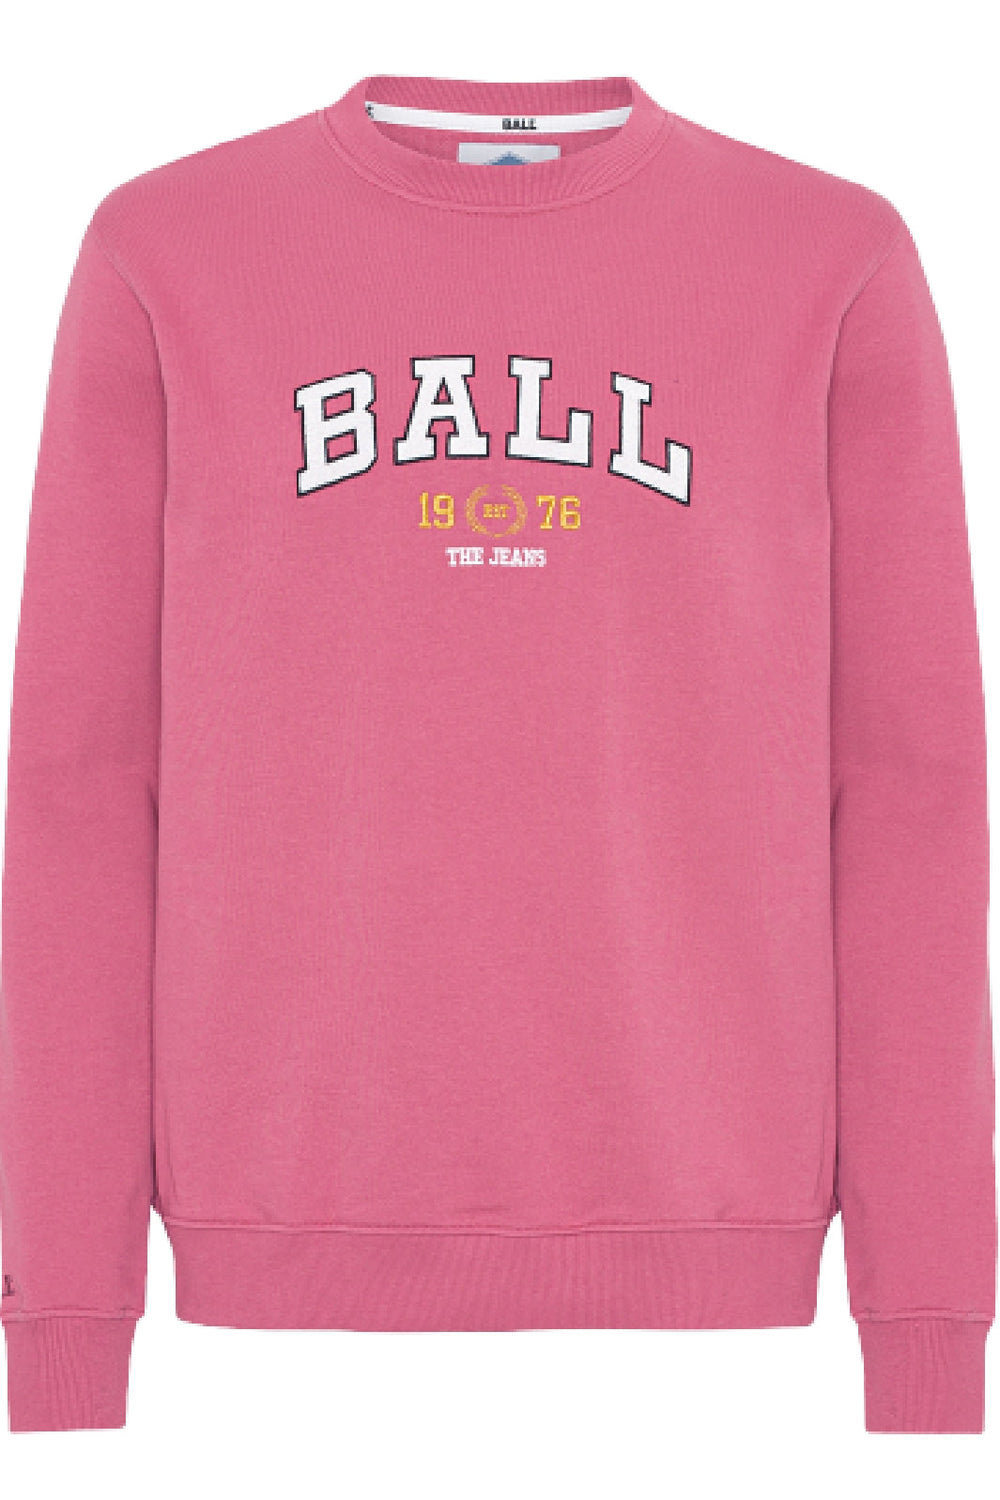 Ball - Sweatshirt L. Taylor - Rose Dawn Sweatshirts 